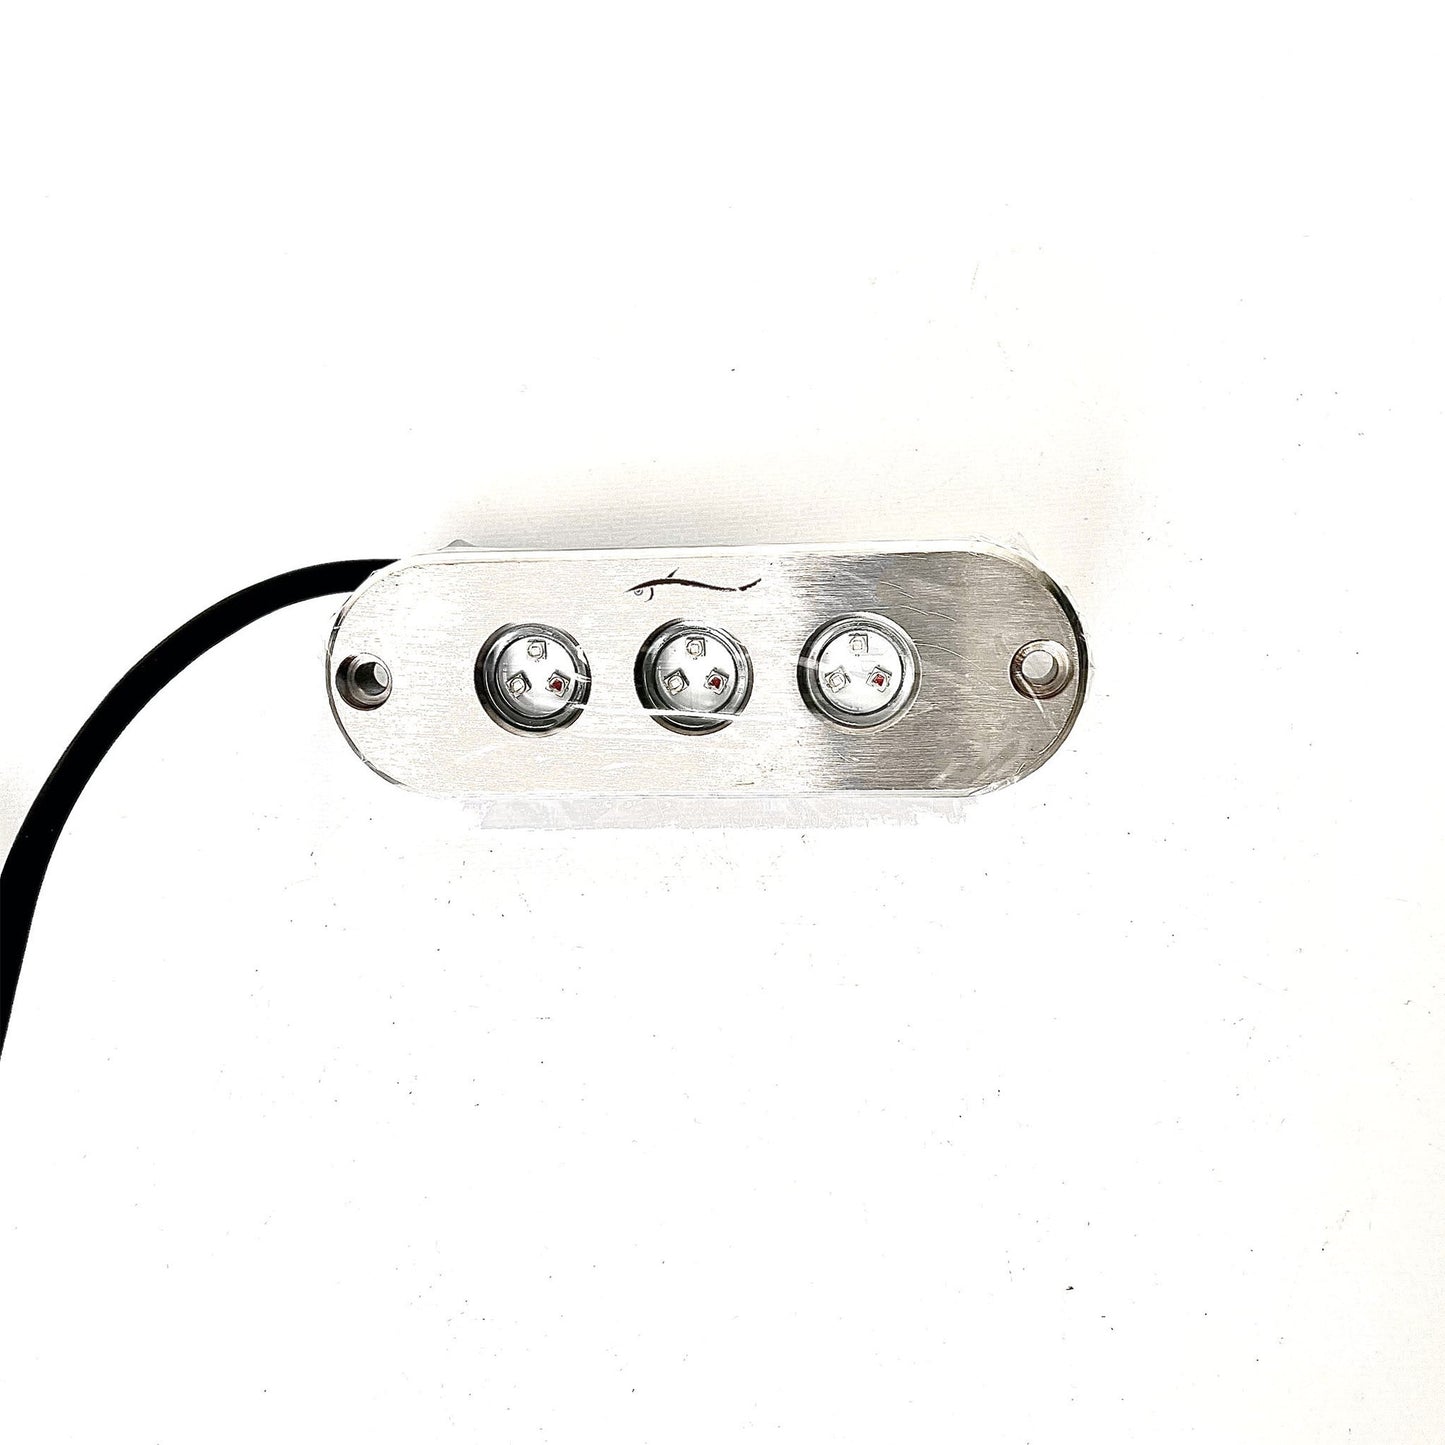 45 Watt 3 Pod Underwater LED RGB Stainless Steel Light top angle packaged